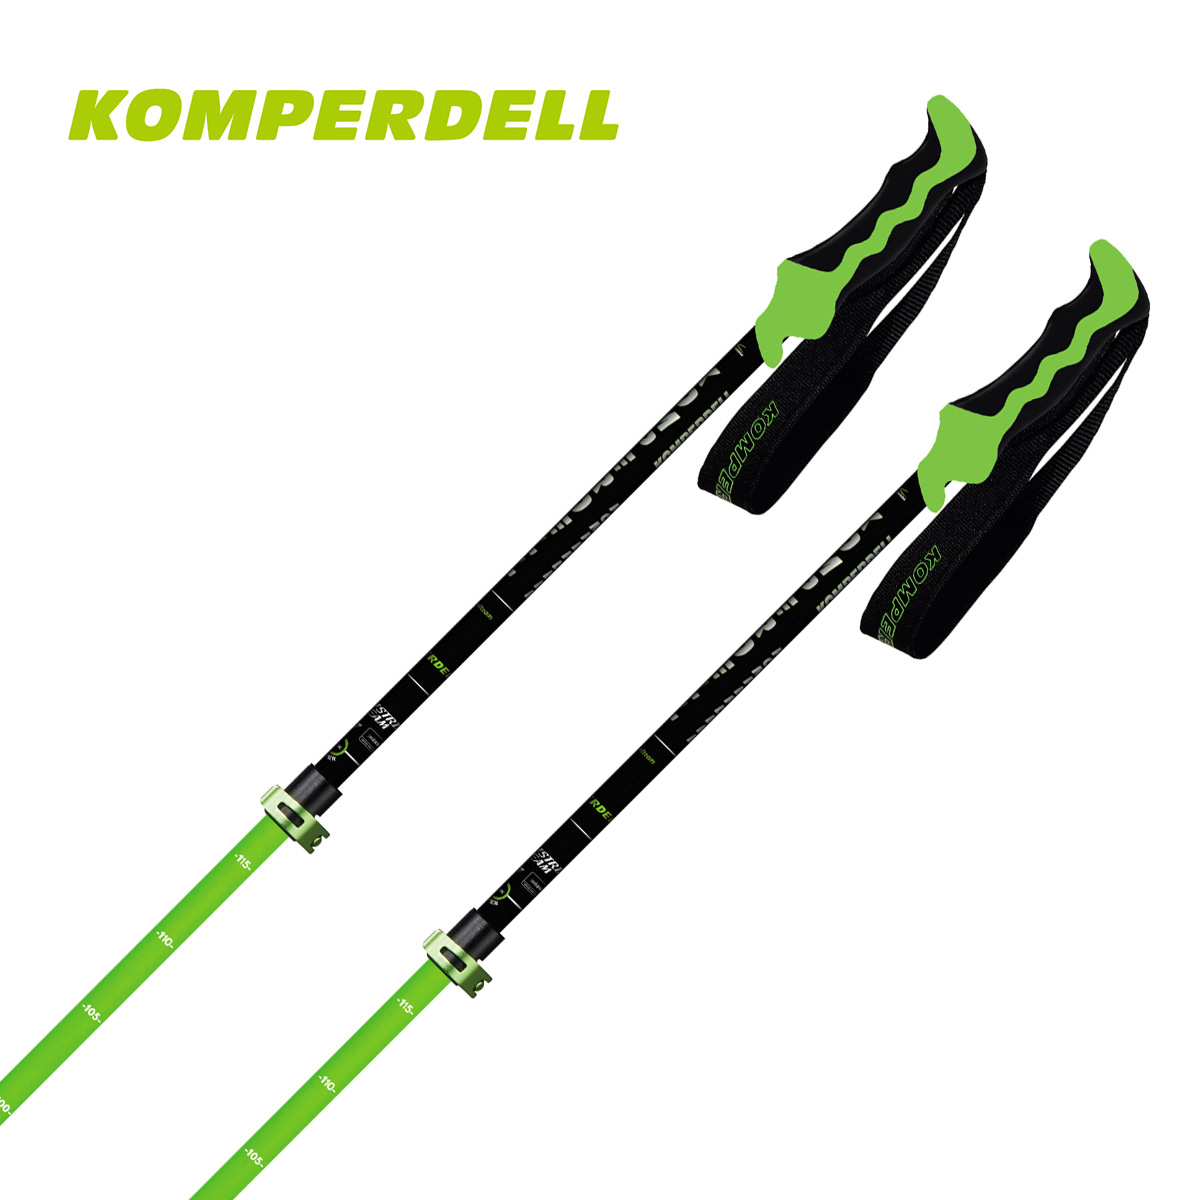 【Ski Pole】KOMPERDELL - Ski Shop - Japanese Brand Ski Gear